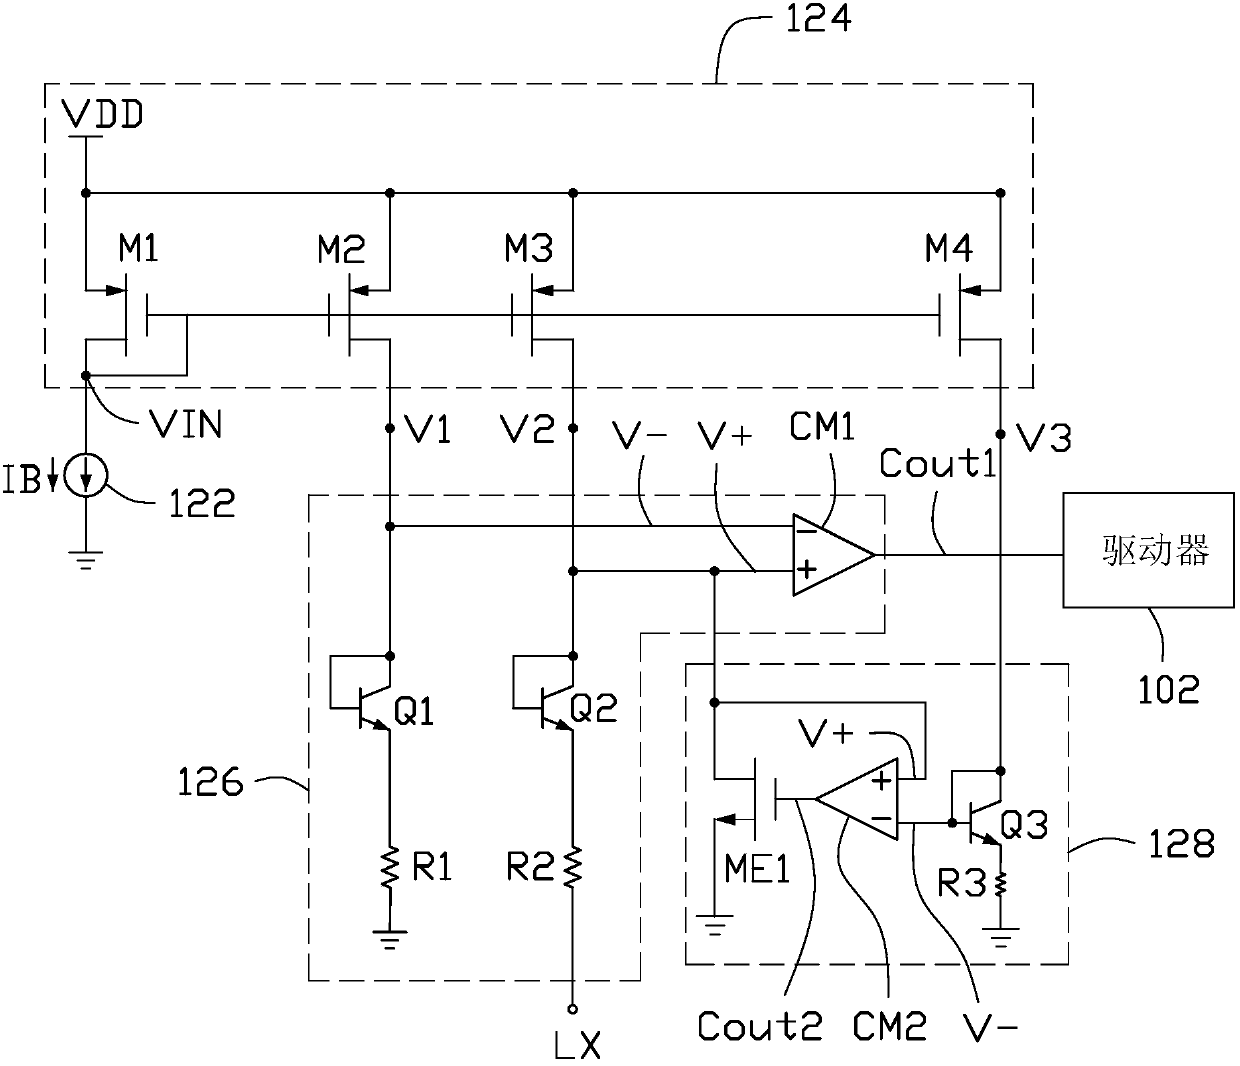 Zero current detection circuit and DC converter